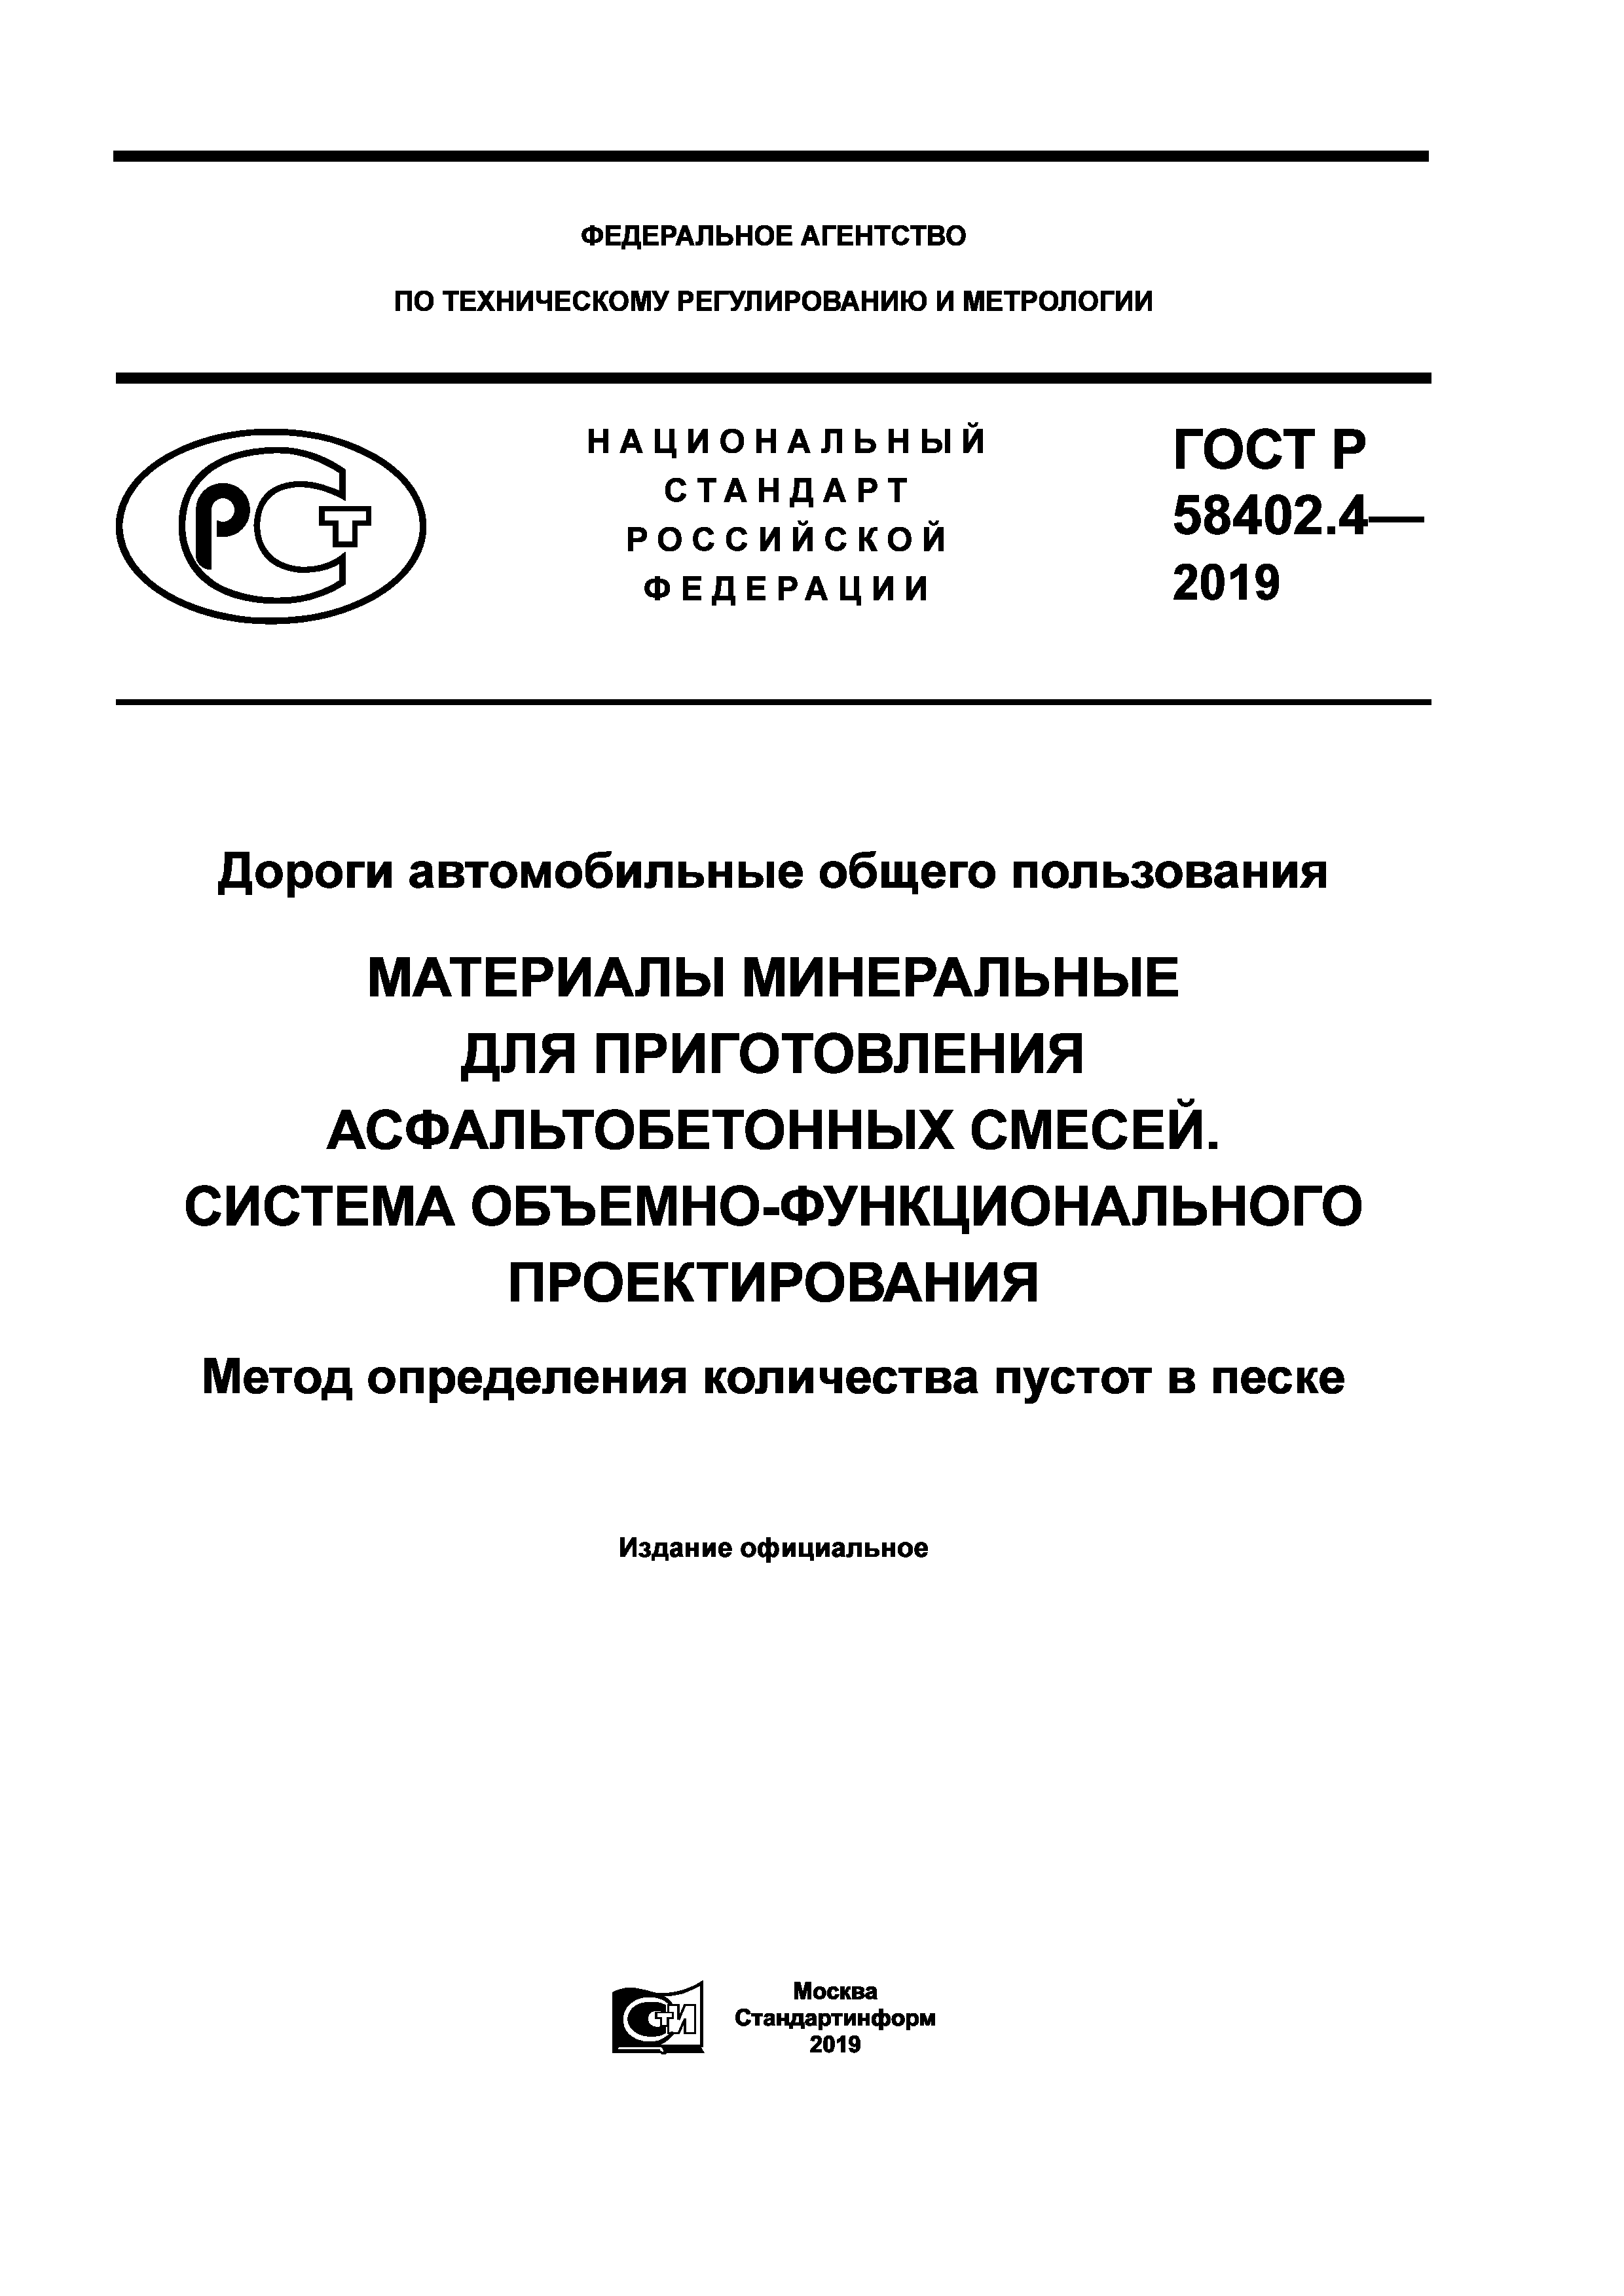 ГОСТ Р 58402.4-2019